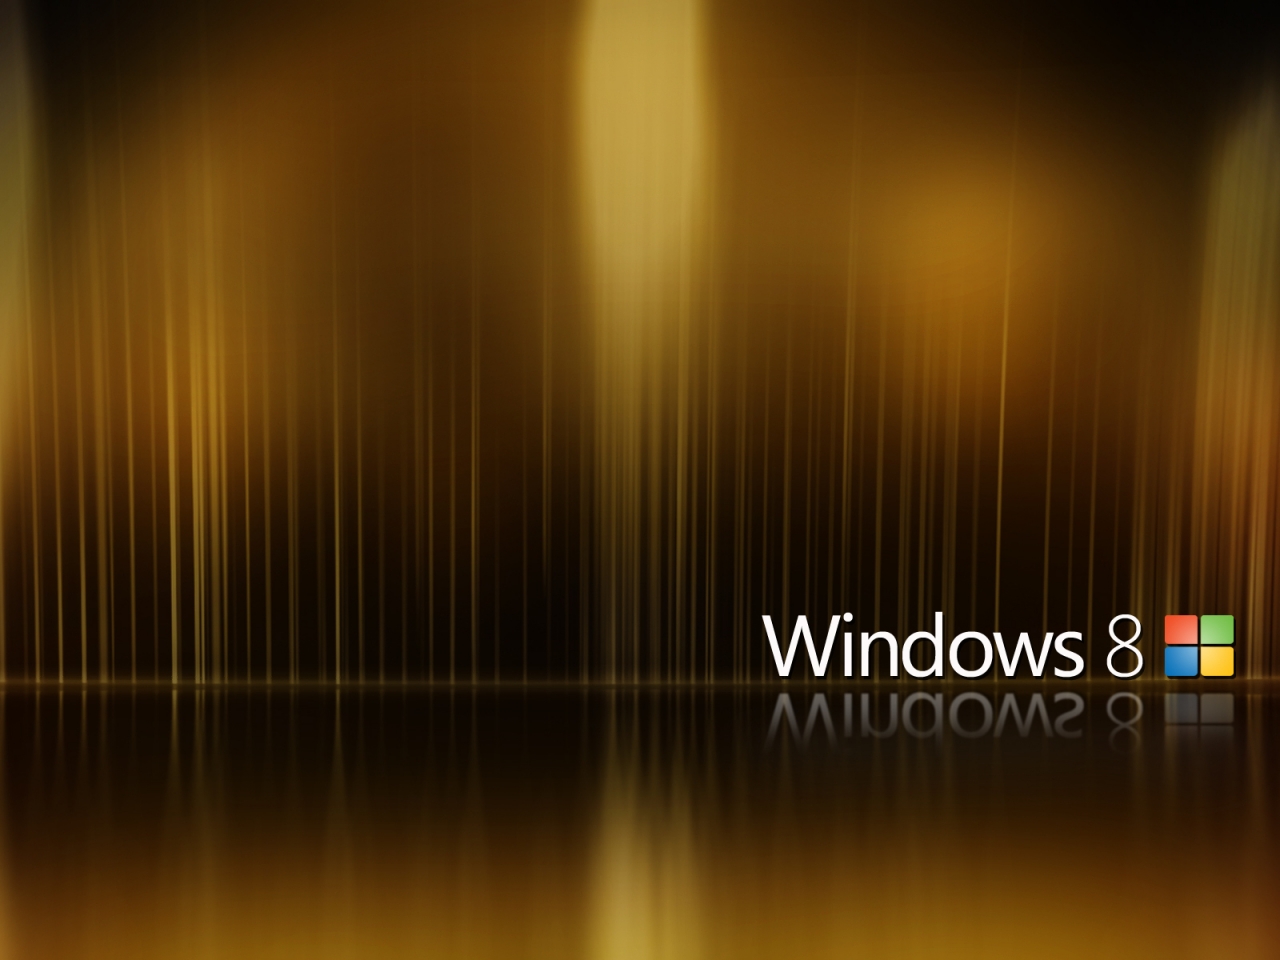 Fantastic Windows 8 for 1280 x 960 resolution